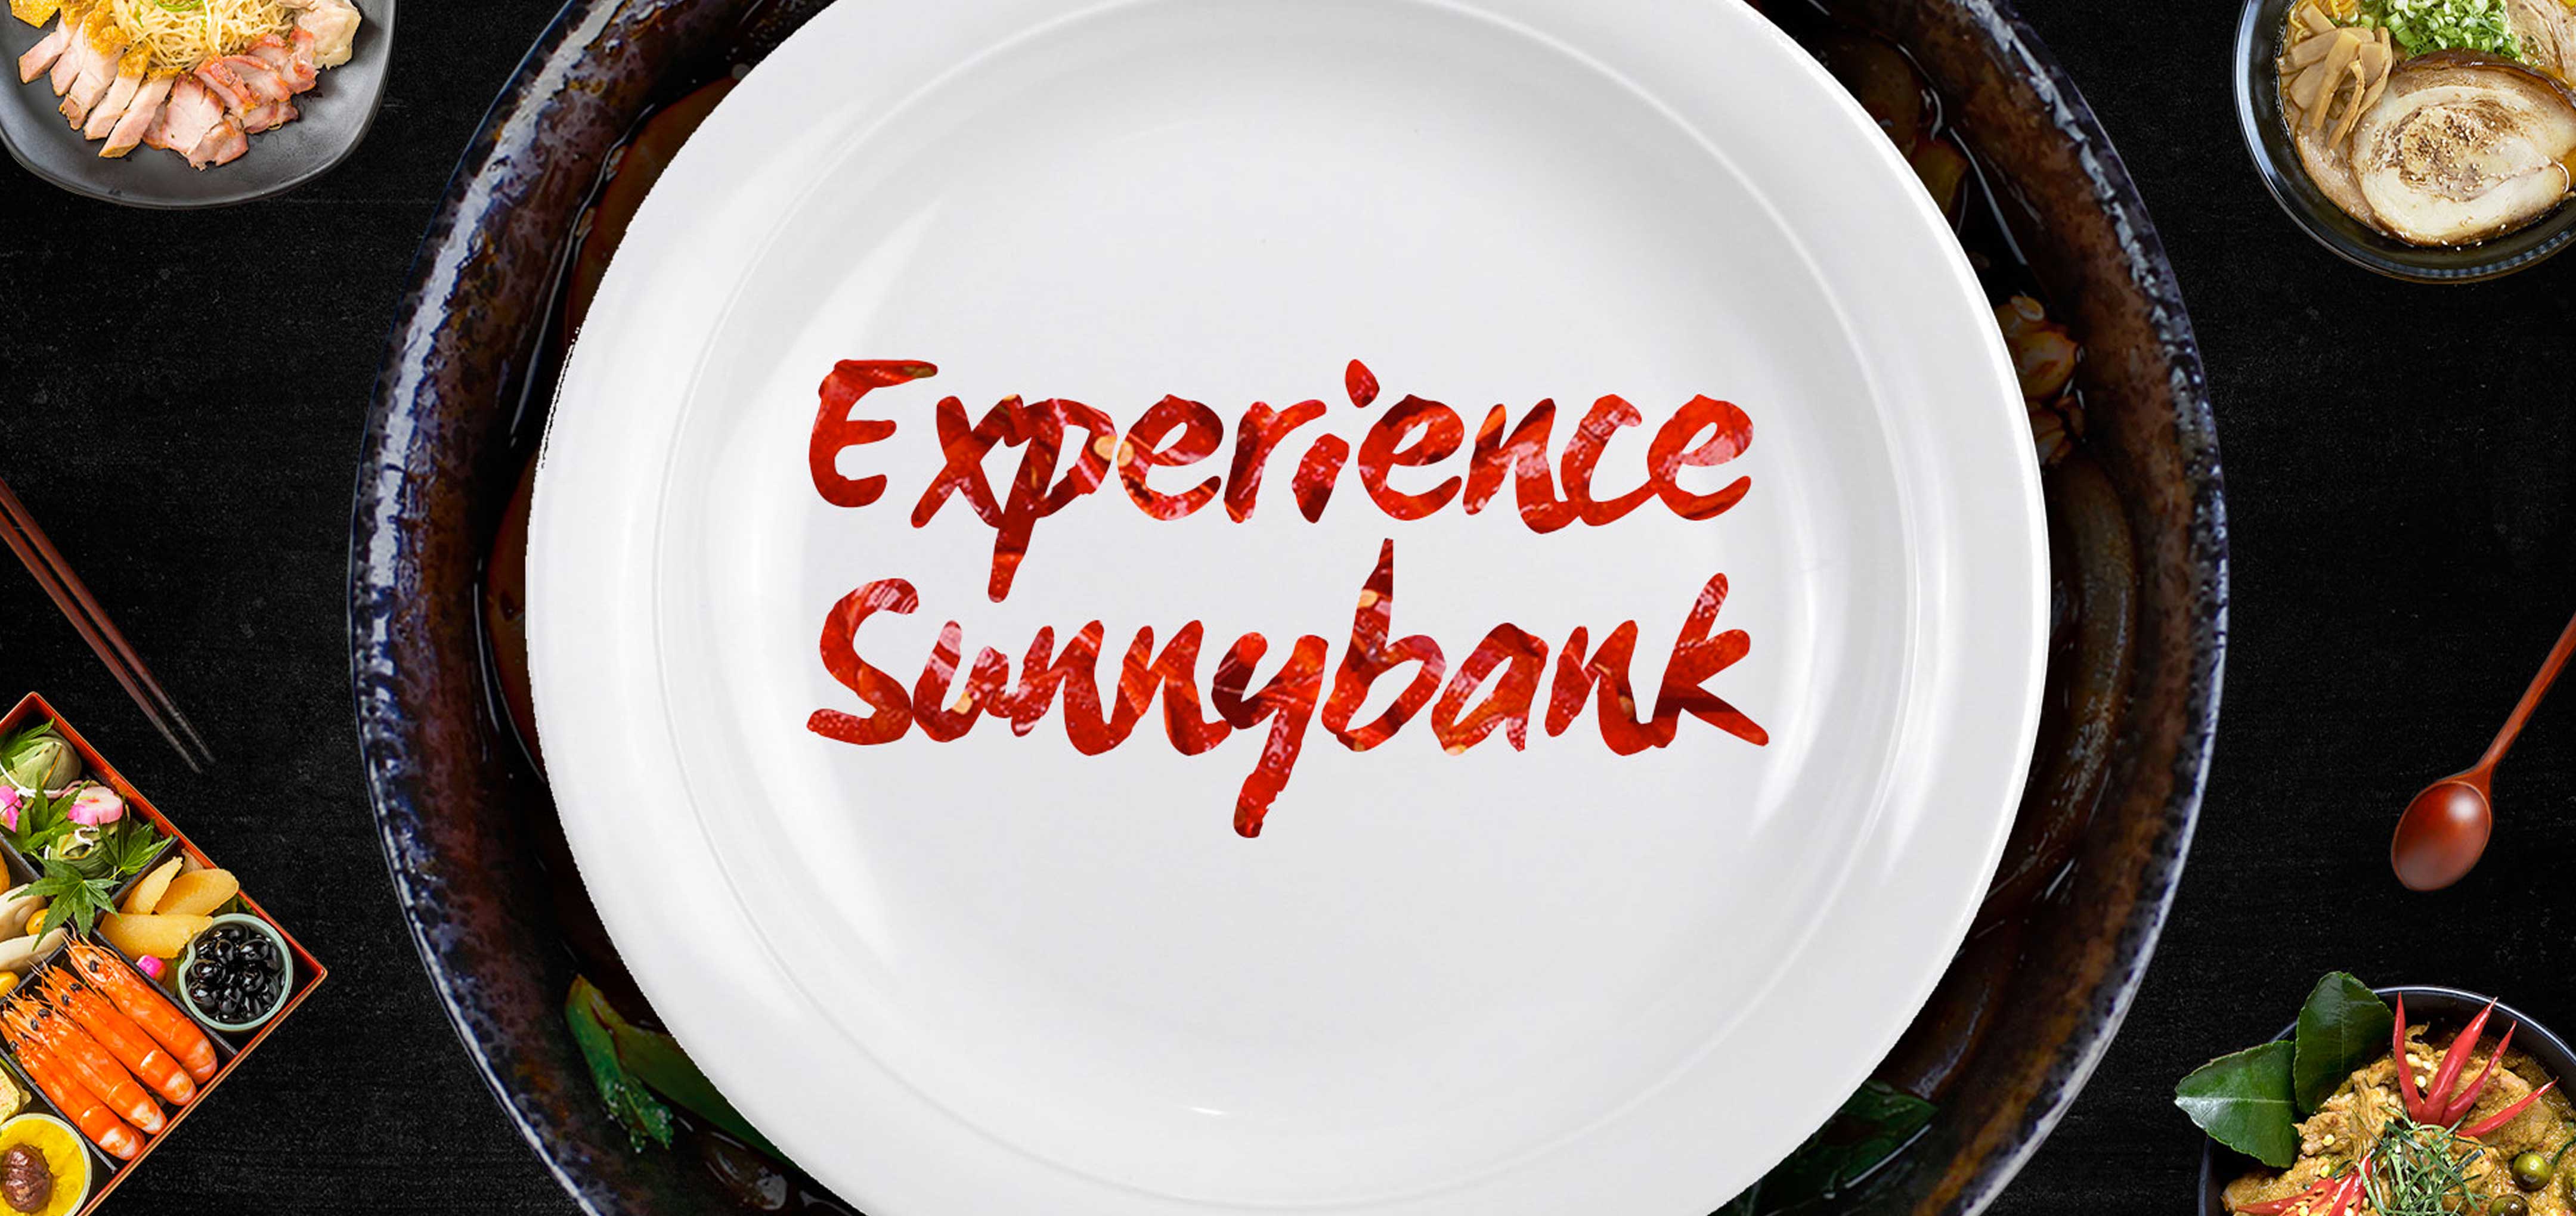 Experience Sunnybank